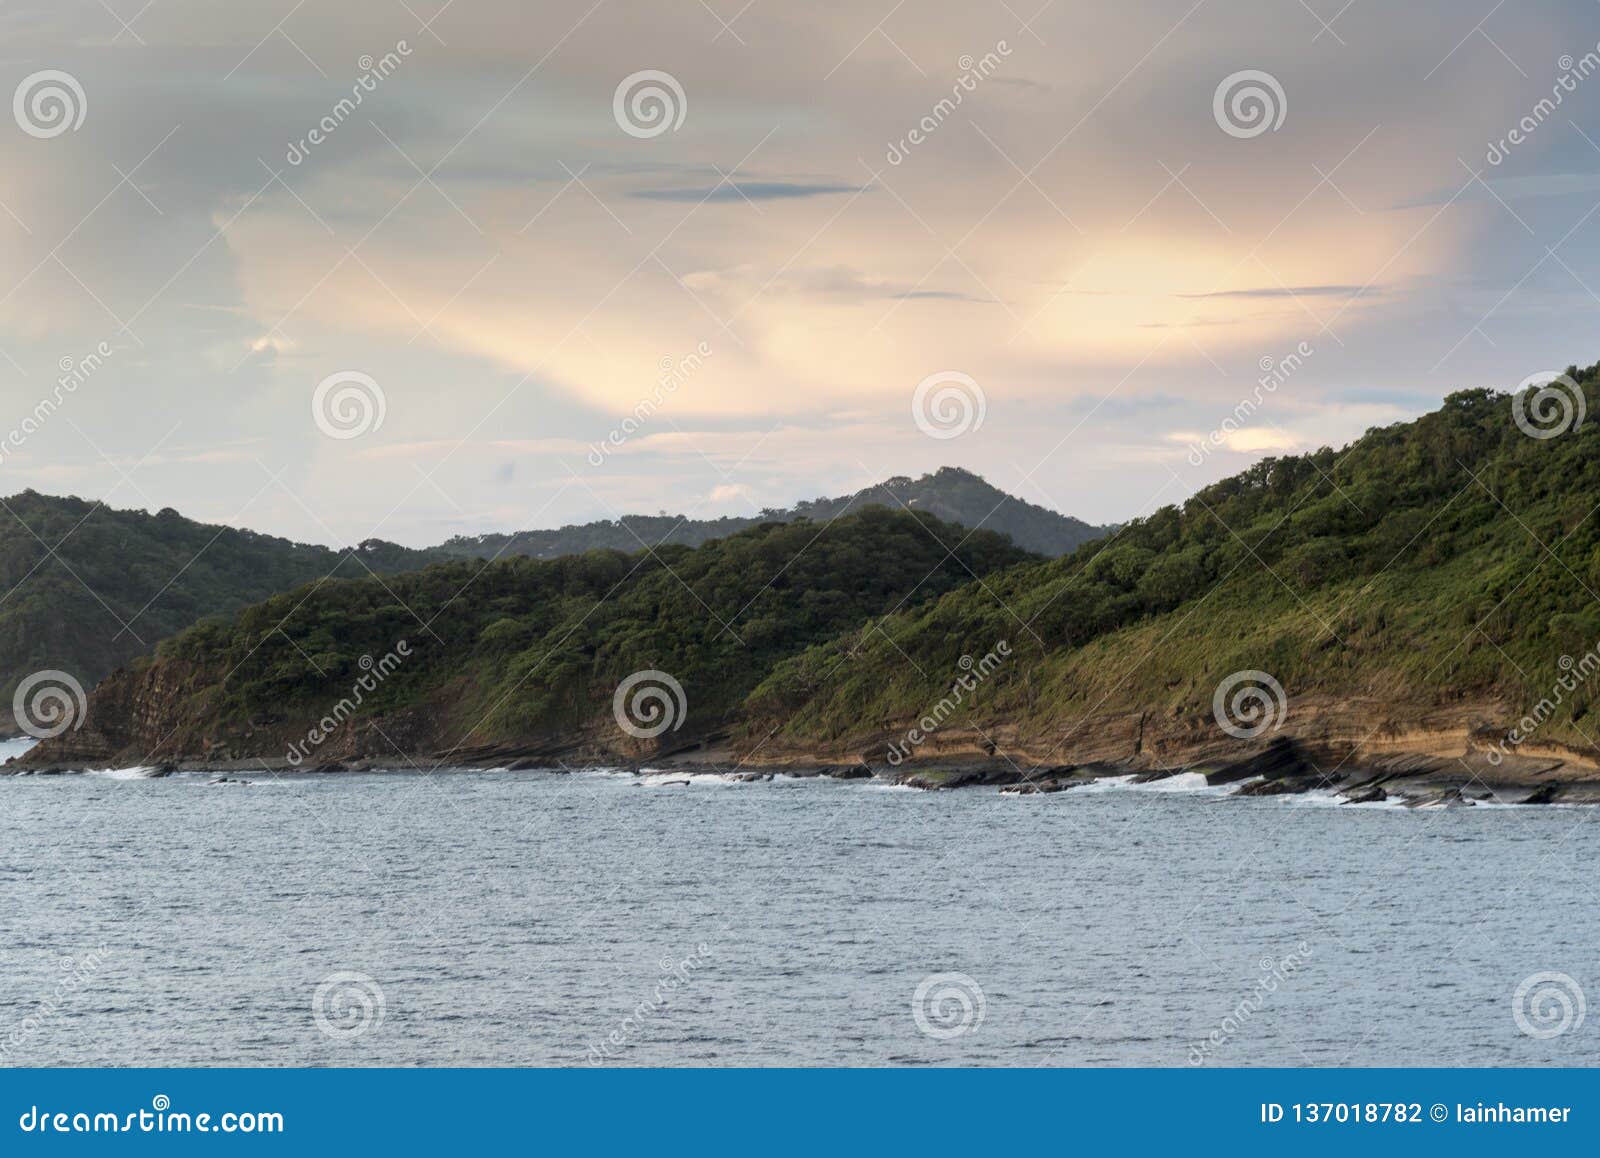 sea, land and sky at sunset off san juan del sur nicaragua from island princess